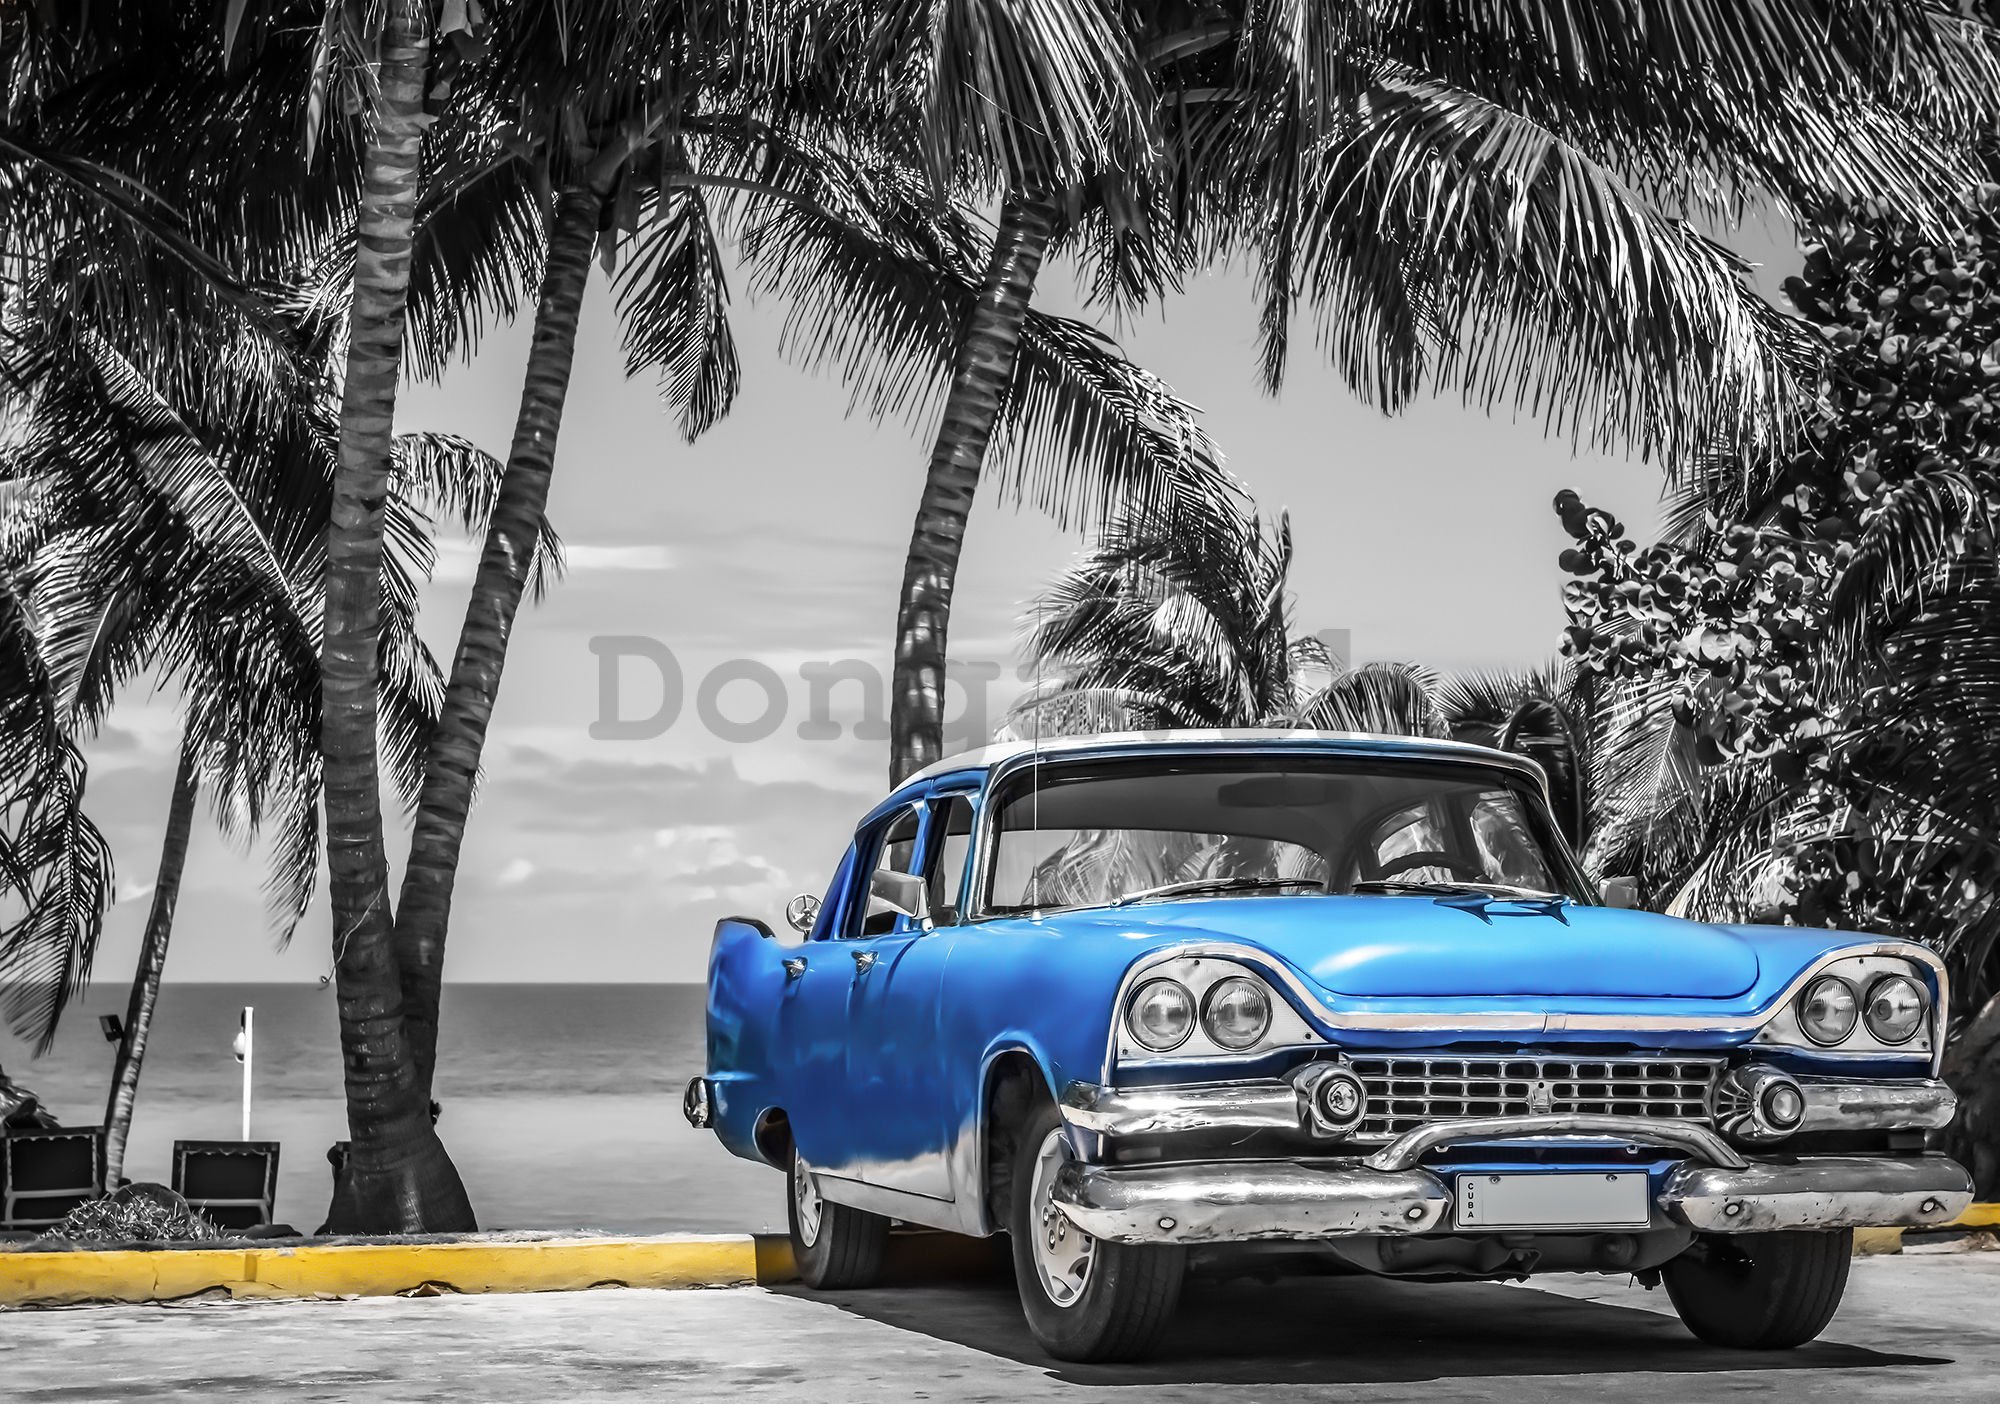 Fototapeta vliesová: Kuba modré auto pri mori - 184x254 cm